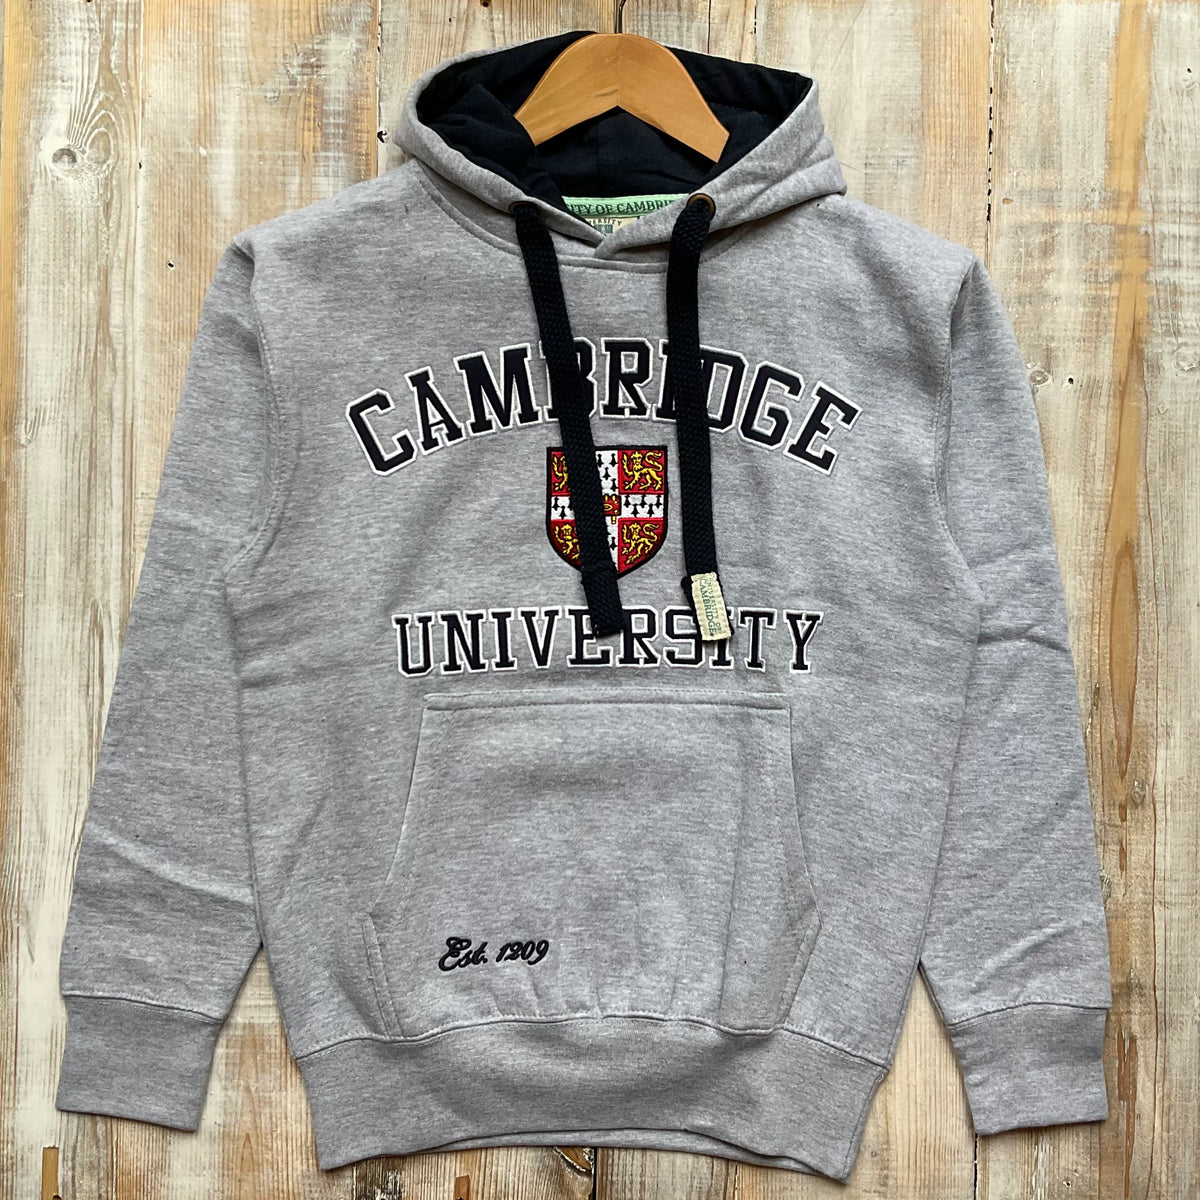 Cambridge Emblem Hoodie University Shop at King\'s College, - – Adult The Cambridge